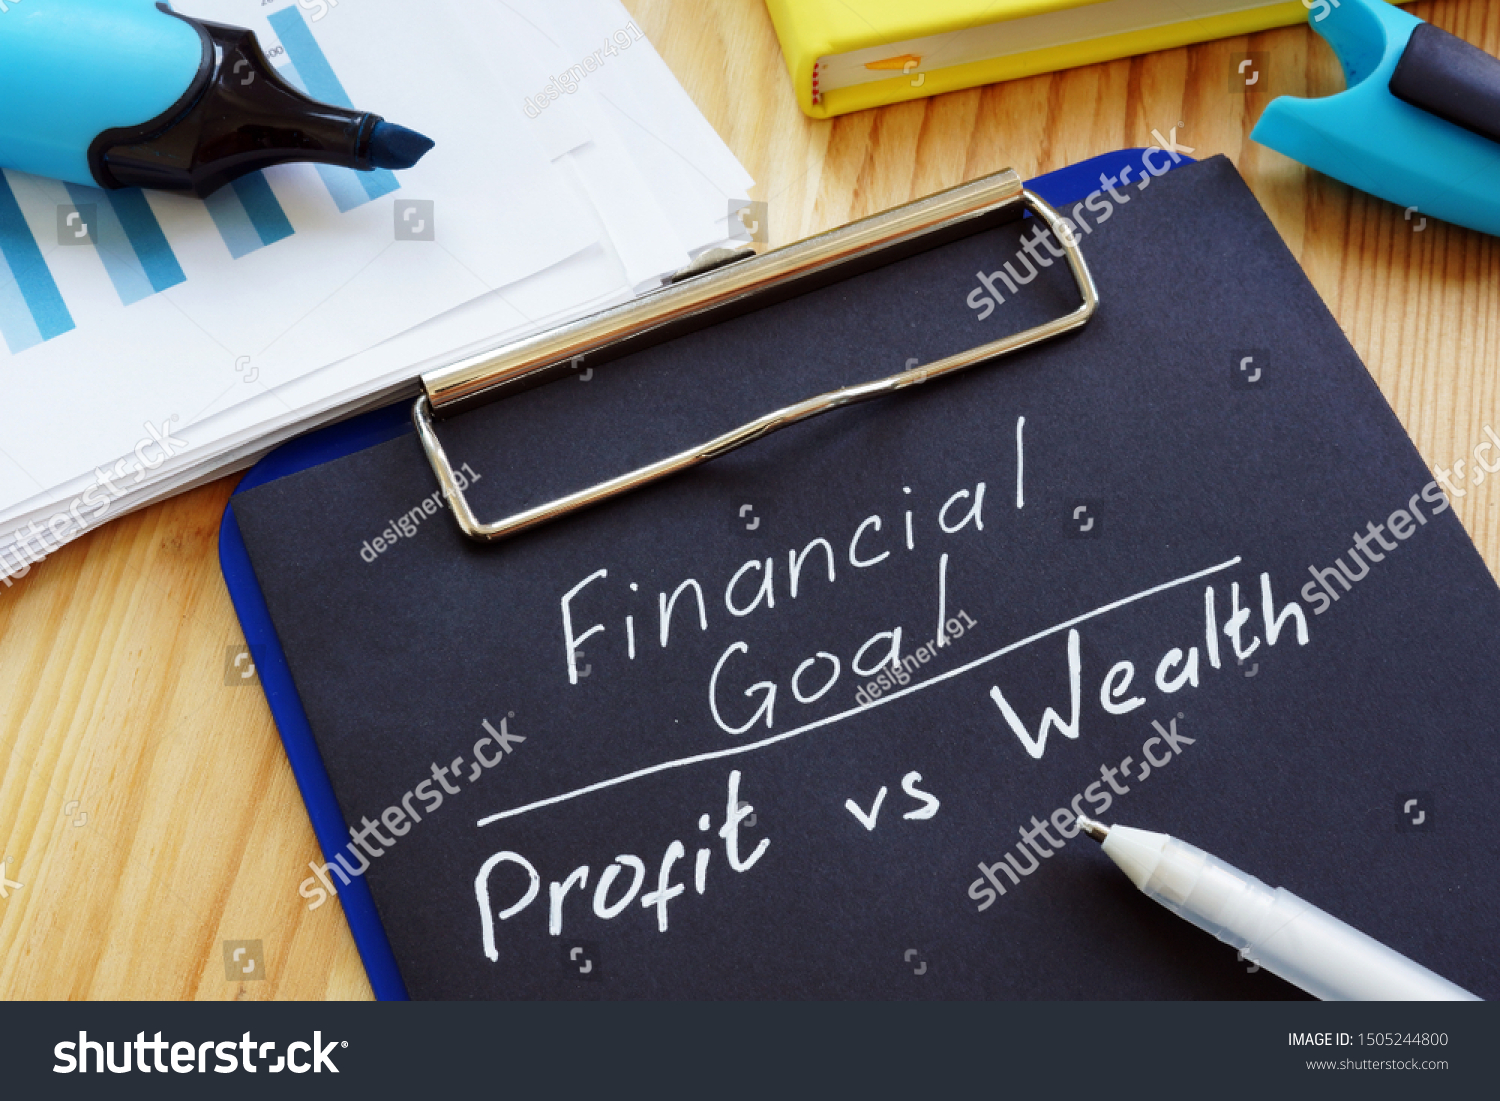 Financial Goal - Profit vs Wealth free form on the desk. #1505244800